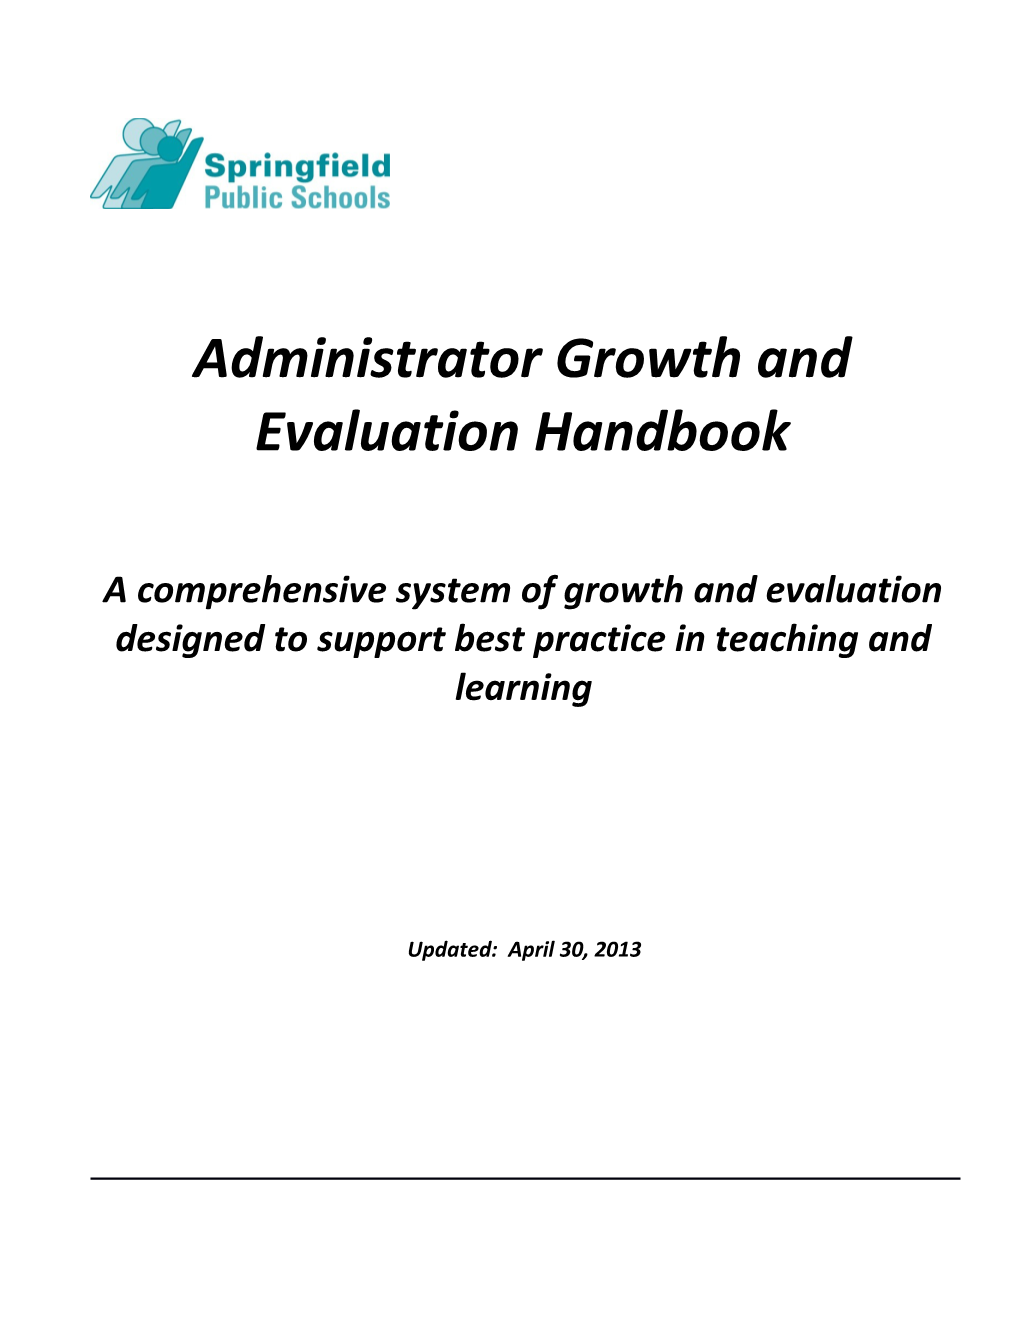 Administrator Growth and Evaluation Handbook